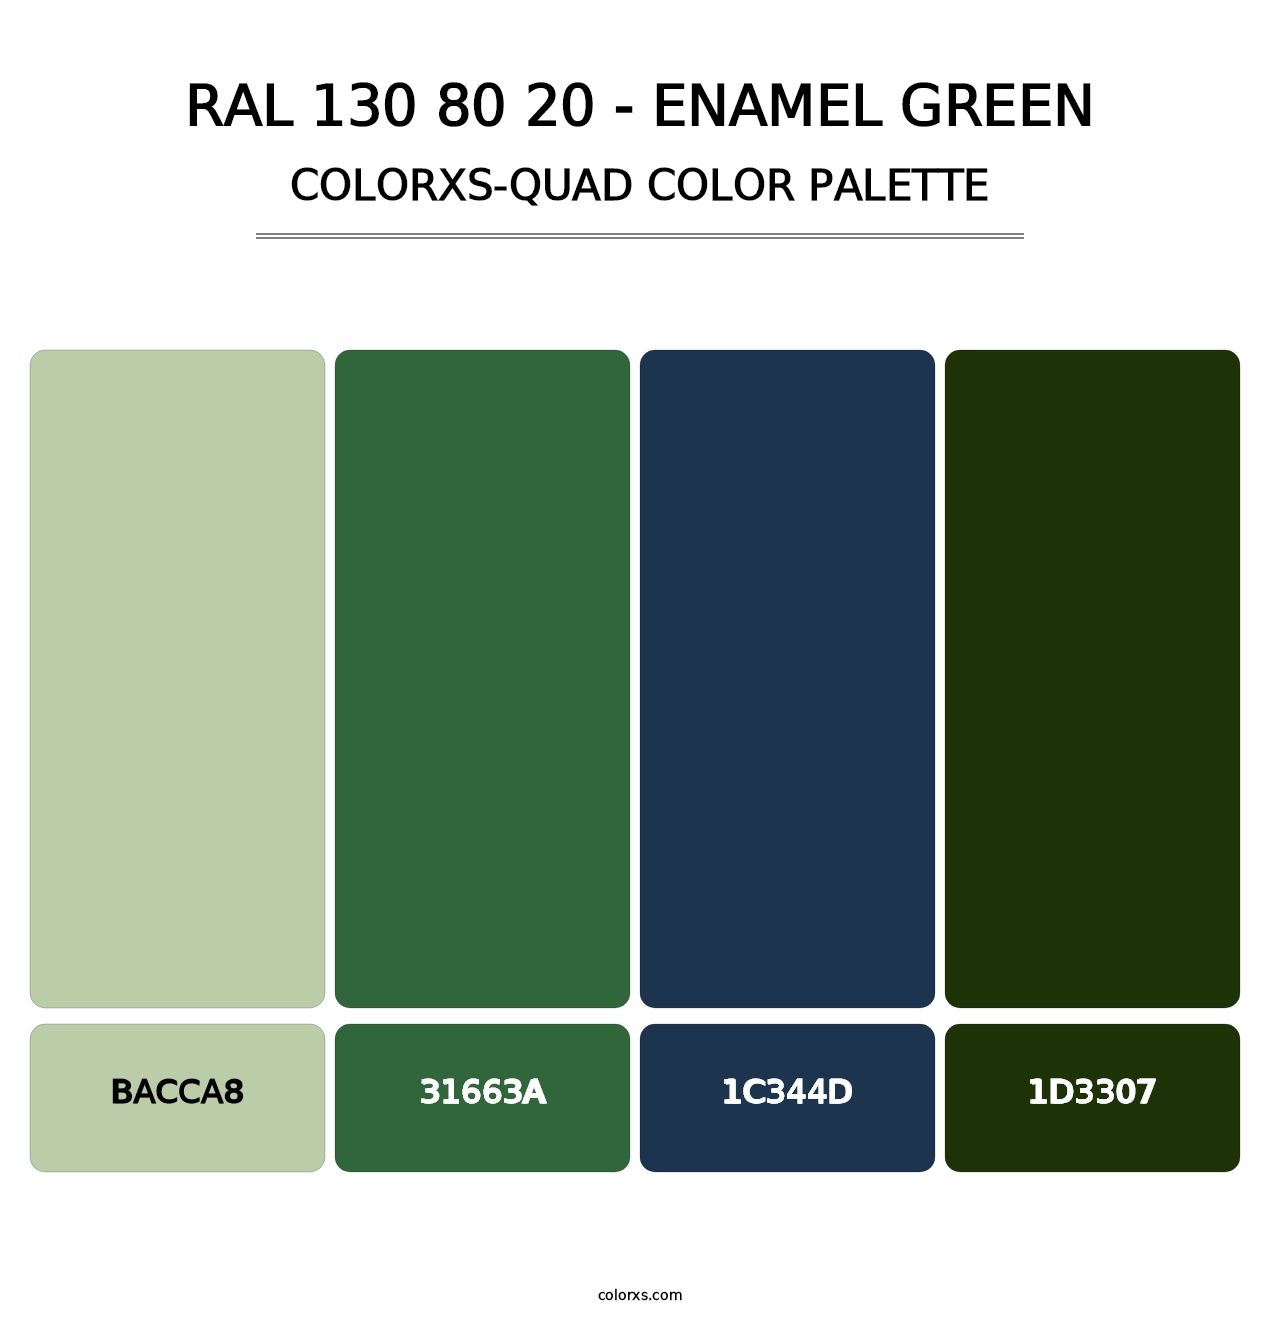 RAL 130 80 20 - Enamel Green - Colorxs Quad Palette